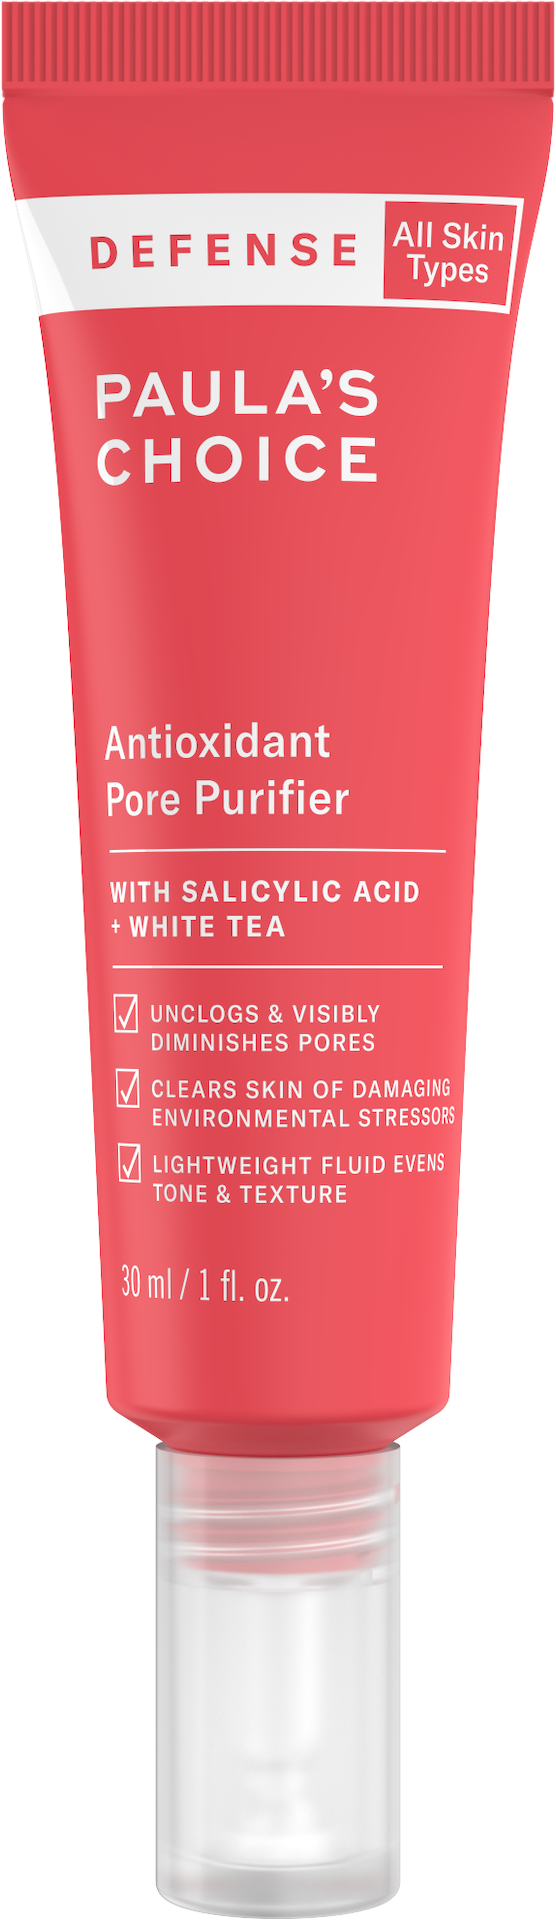 Defense Antioxidant Pore Purifier 30 ml